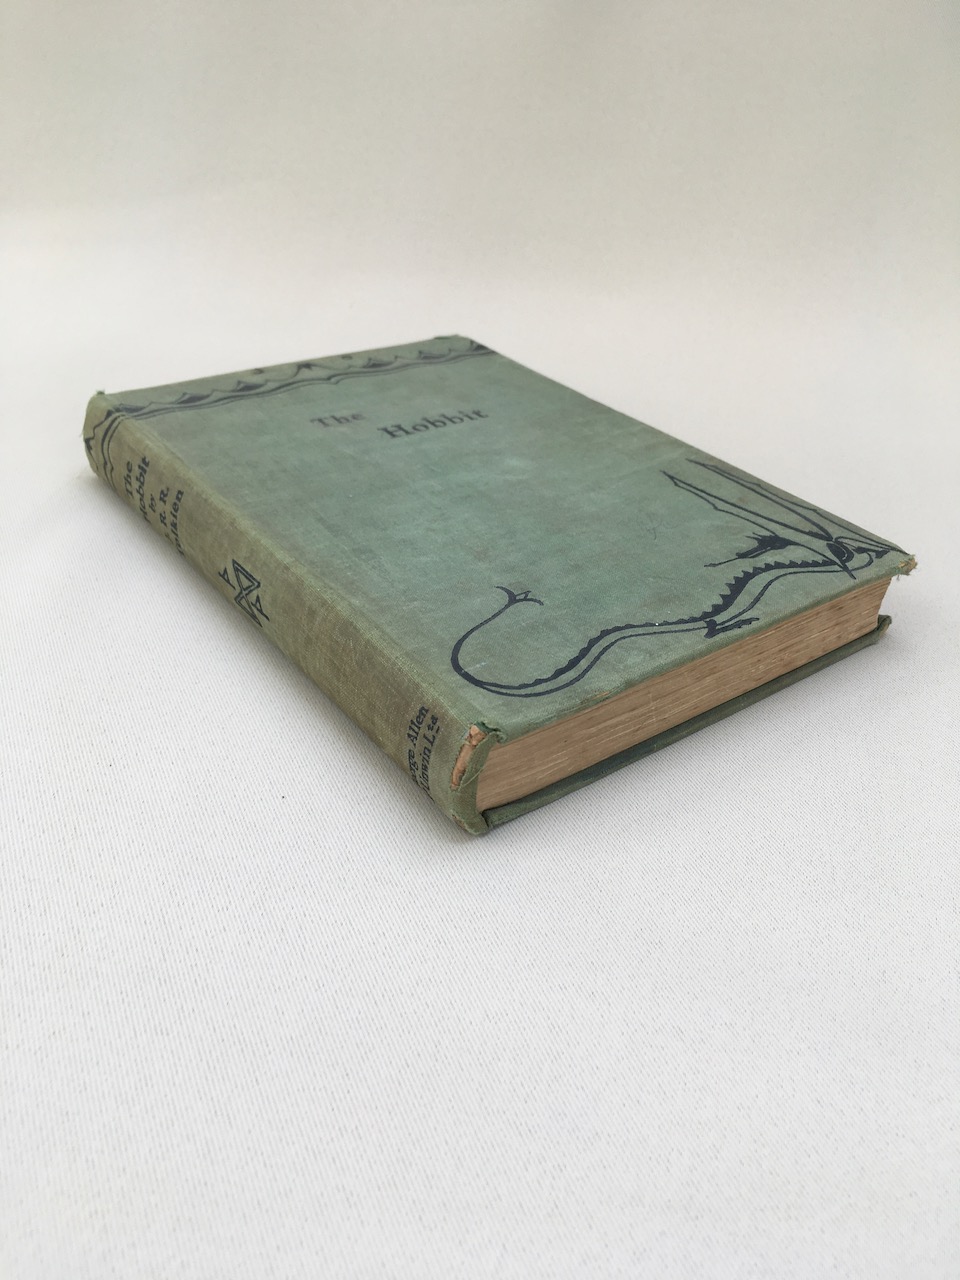 
The Hobbit, George Allen & Unwin, 1937 1st UK Edition 2nd impression 7